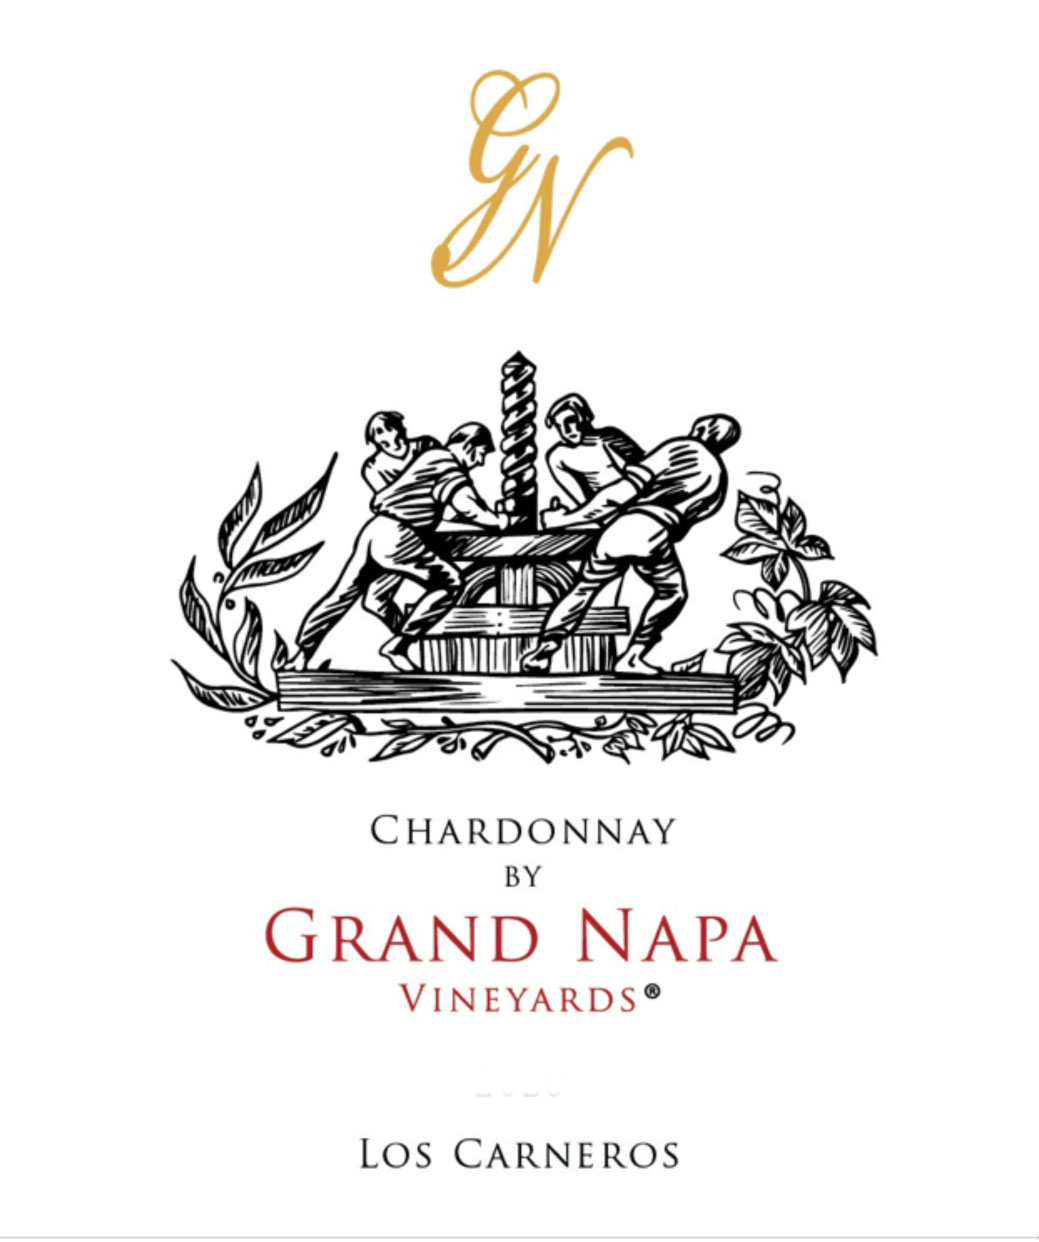 Grand Napa Vineyards - Chardonnay label